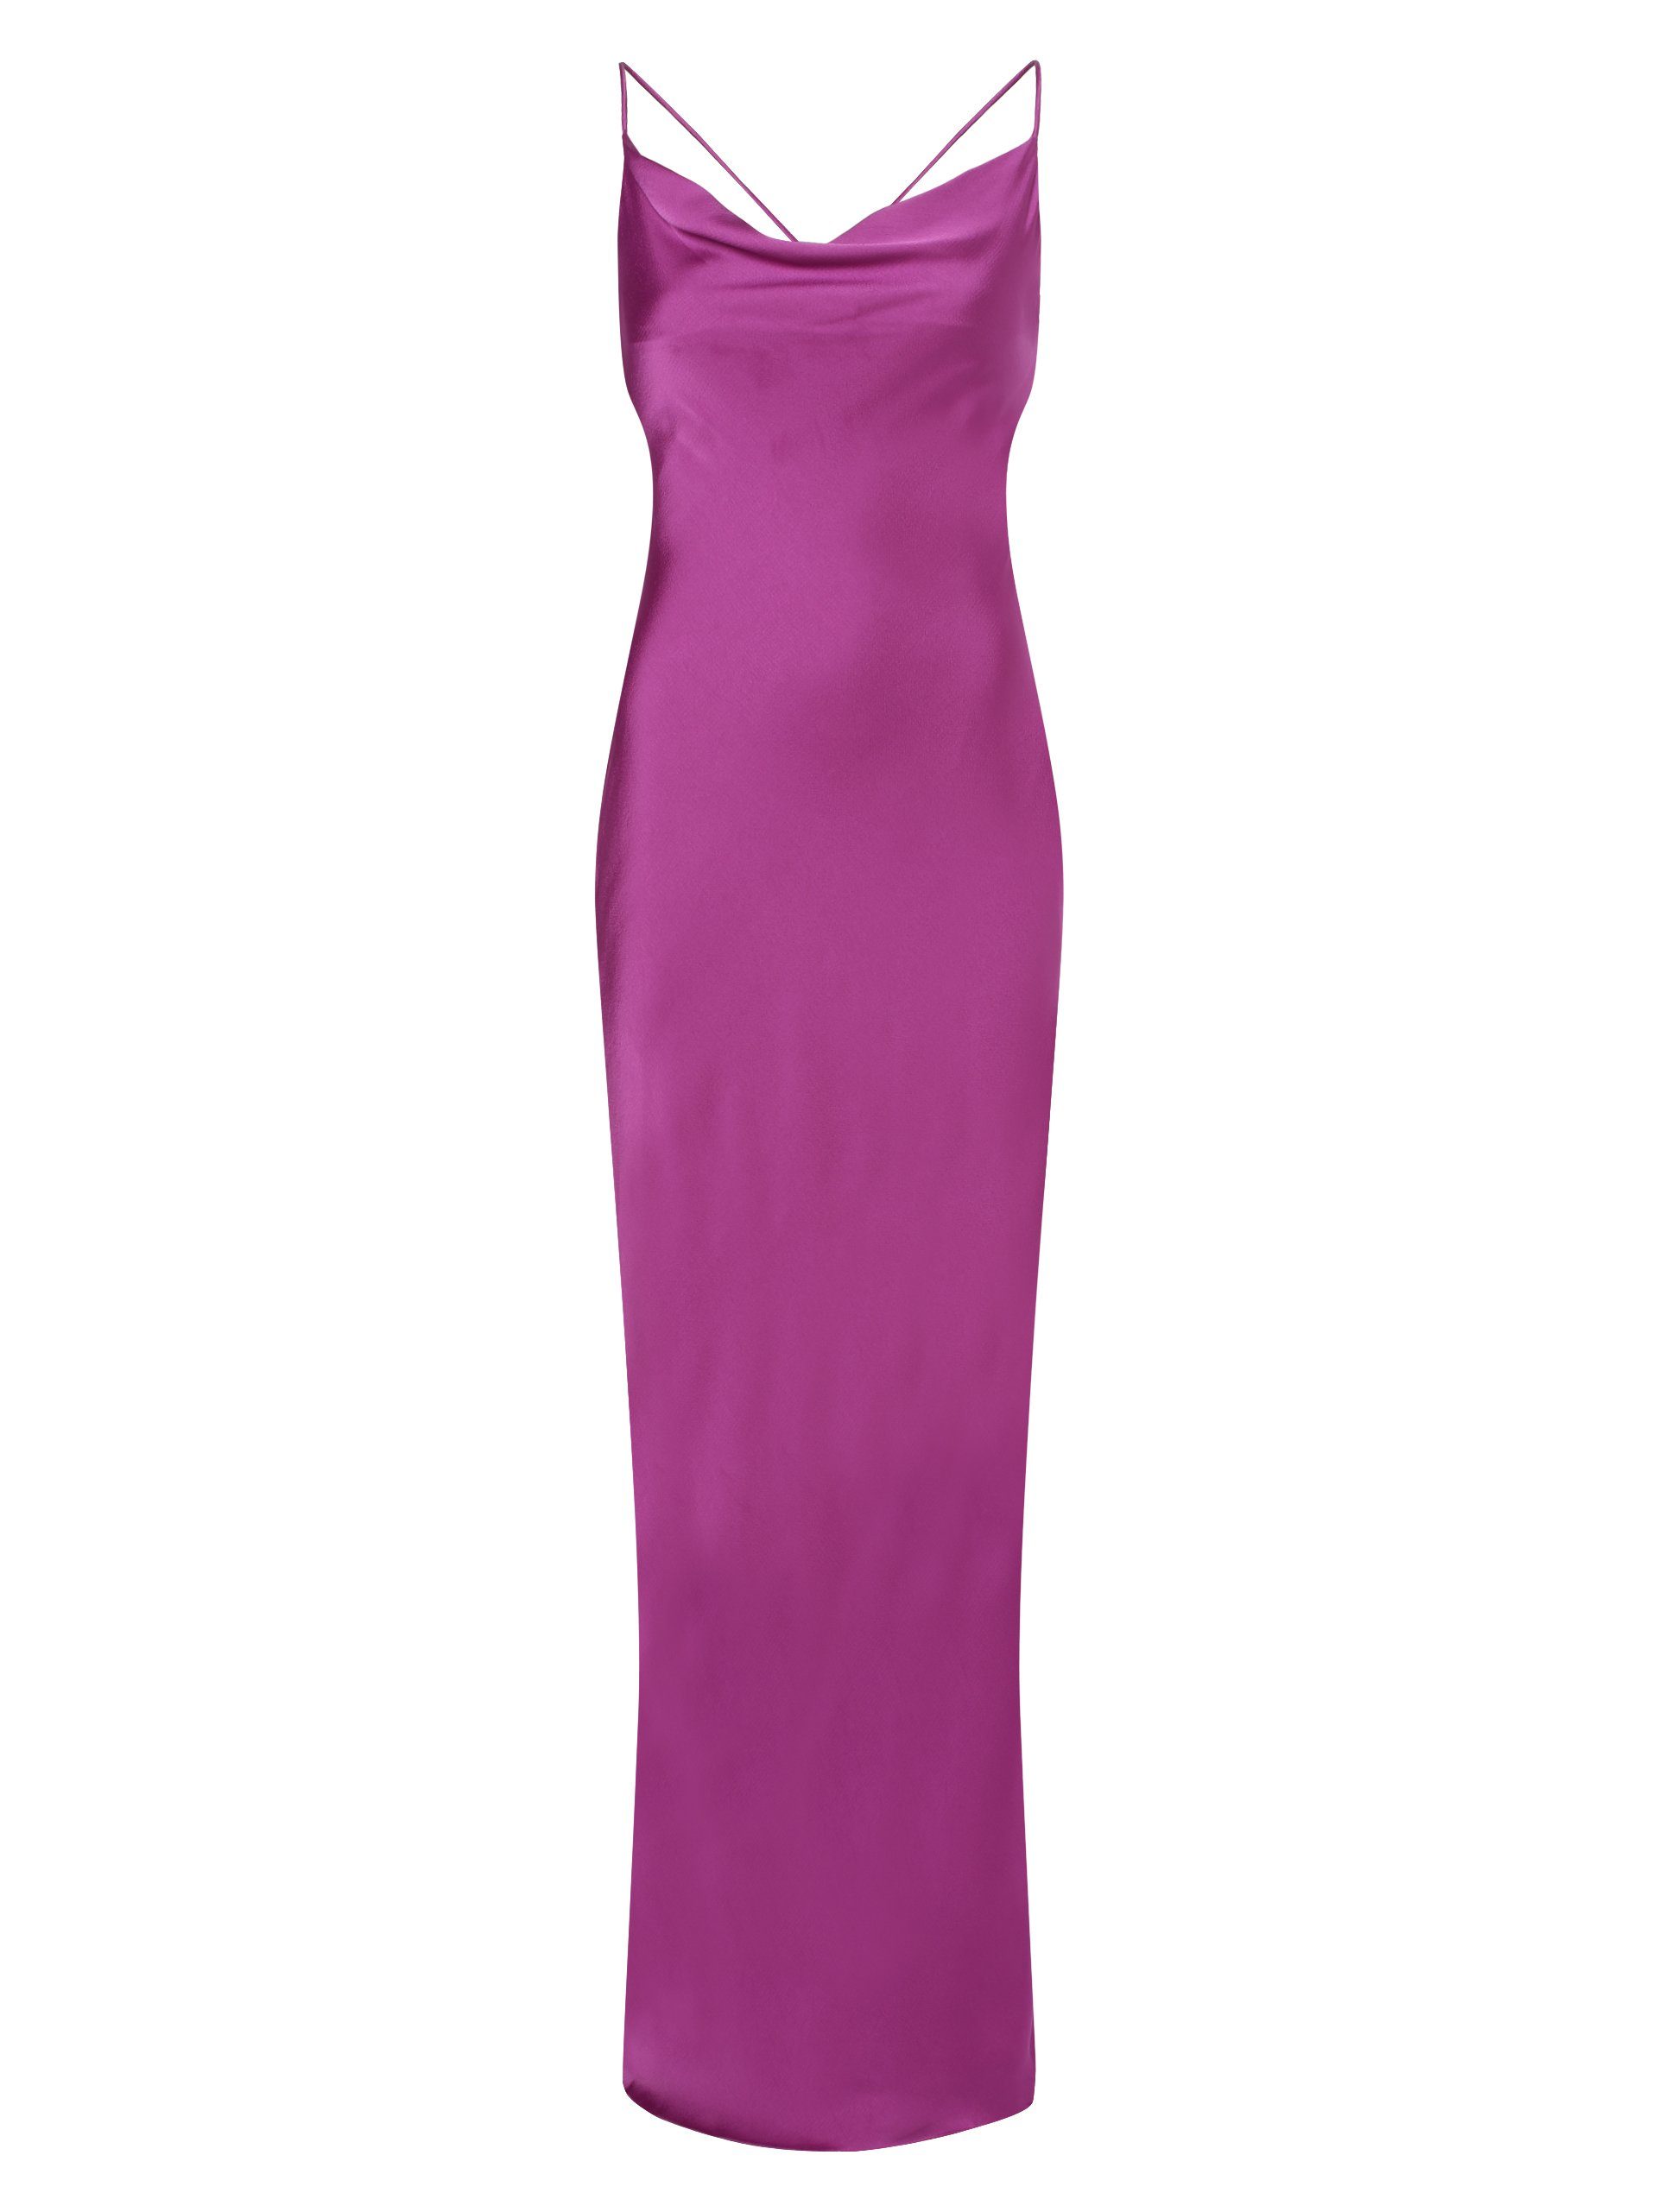 Unique Abendkleid purple | Abendkleider